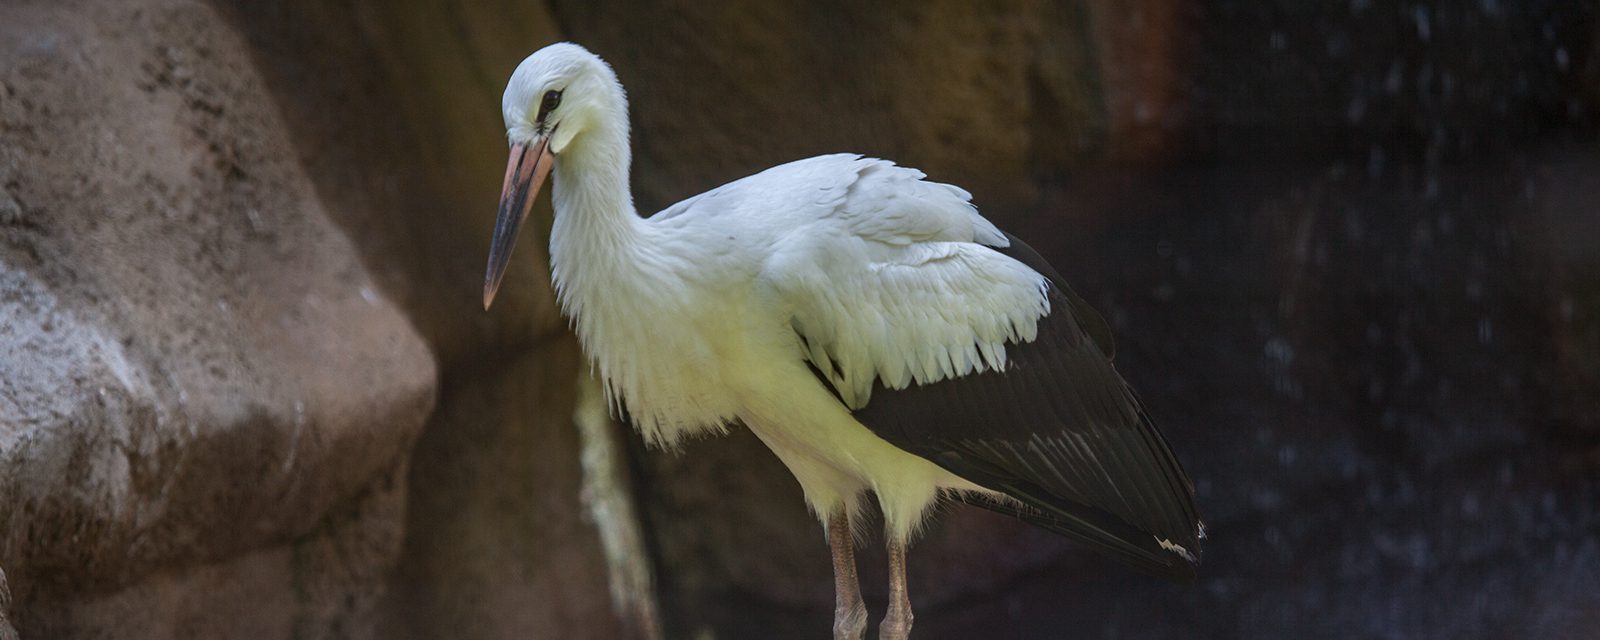 European white stork in exhibit